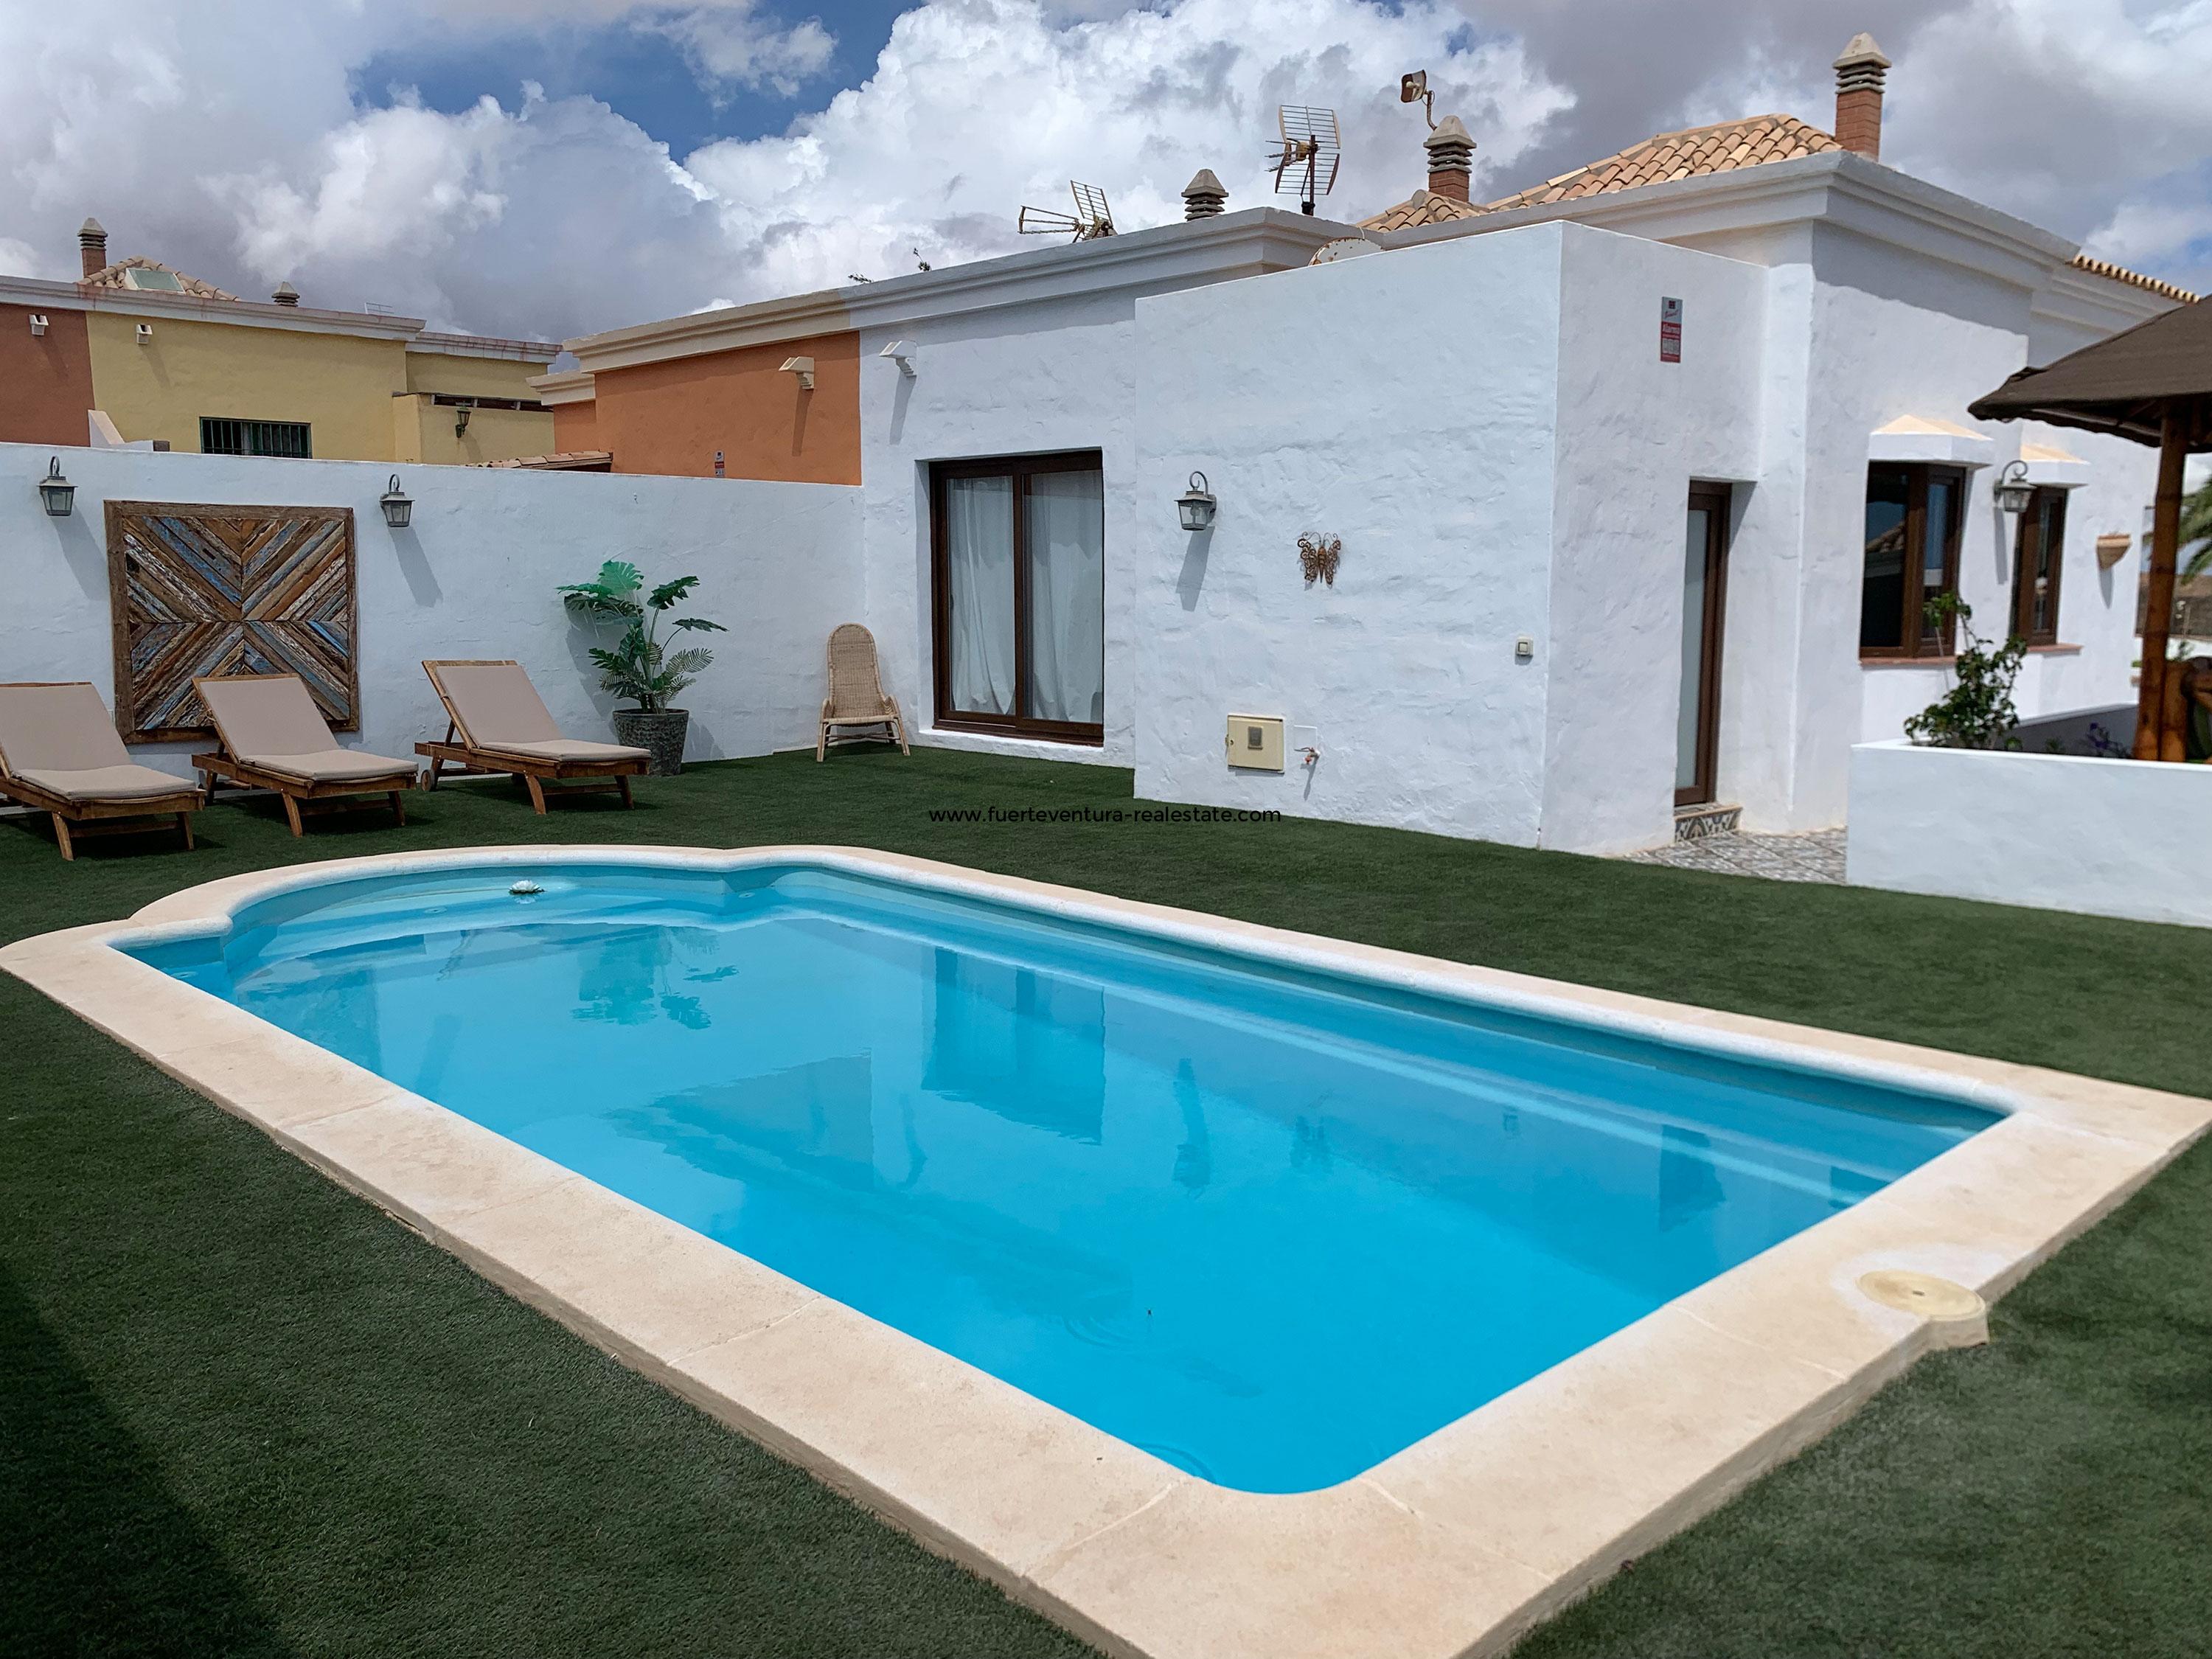 Bonita casa con piscina con buena ubicación en Caleta de Fuste